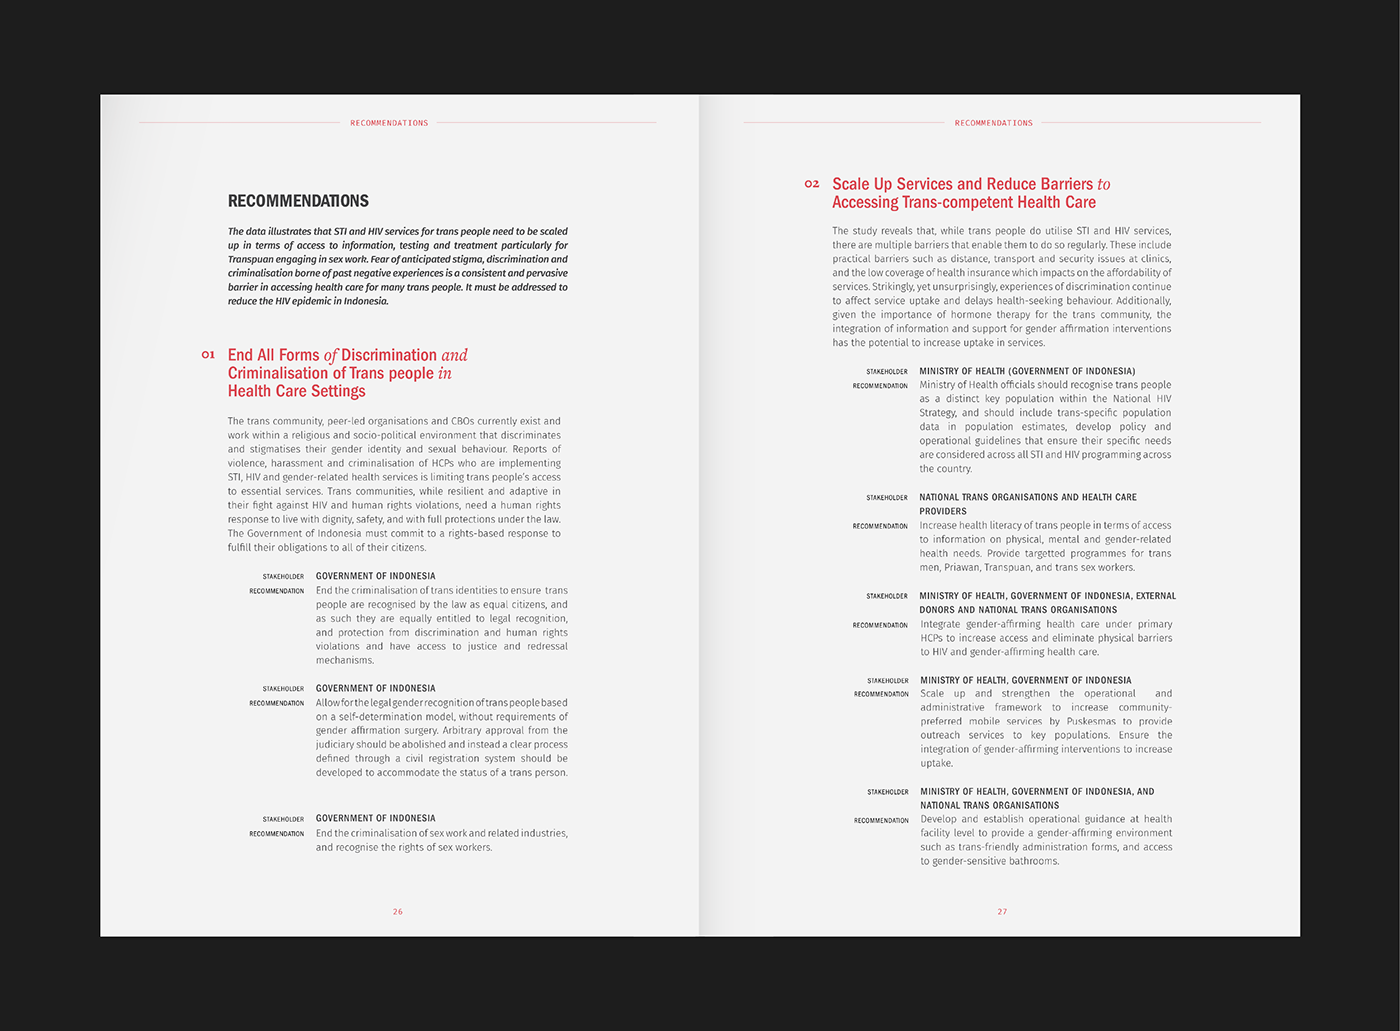 annual report book book design data design data visualisation healthcare infographic publication report transgender